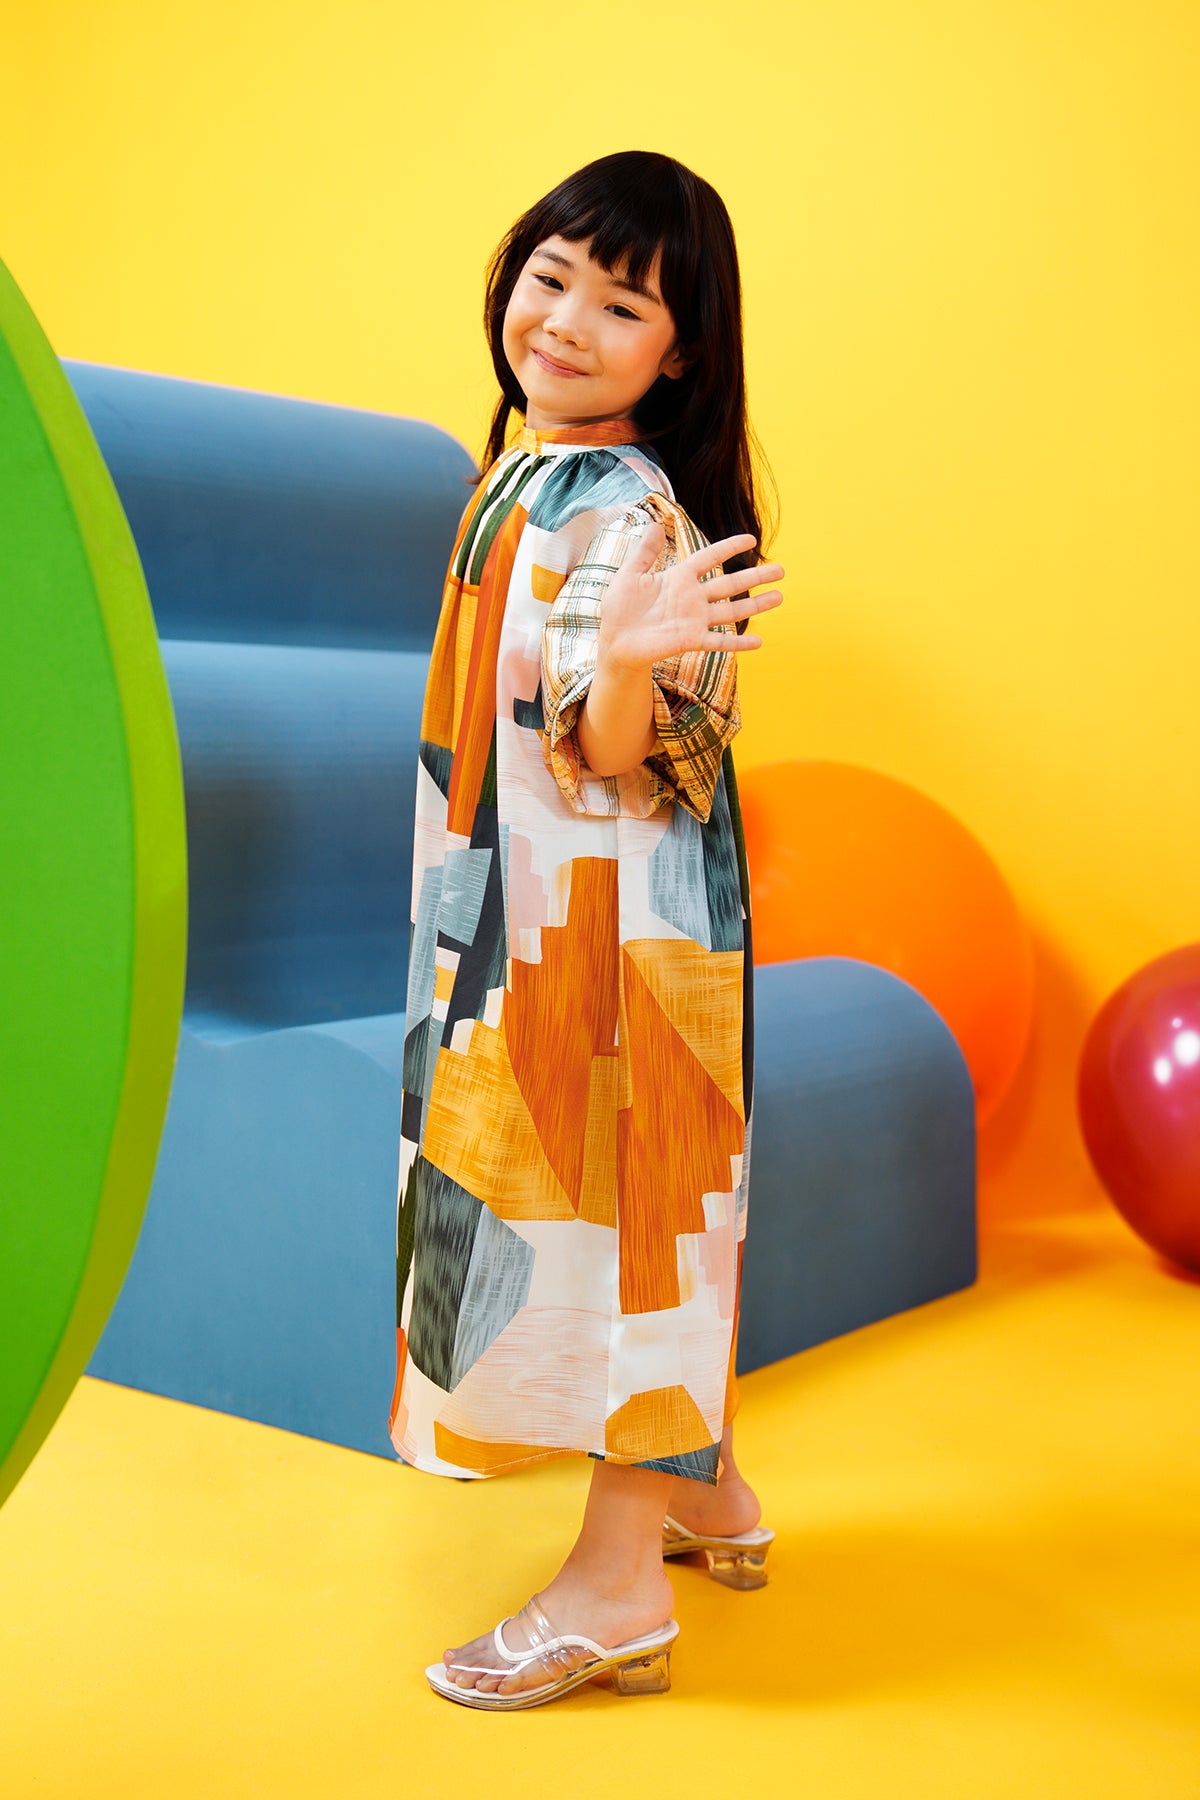 Ameena Kids Puffy Dress - Multicolor